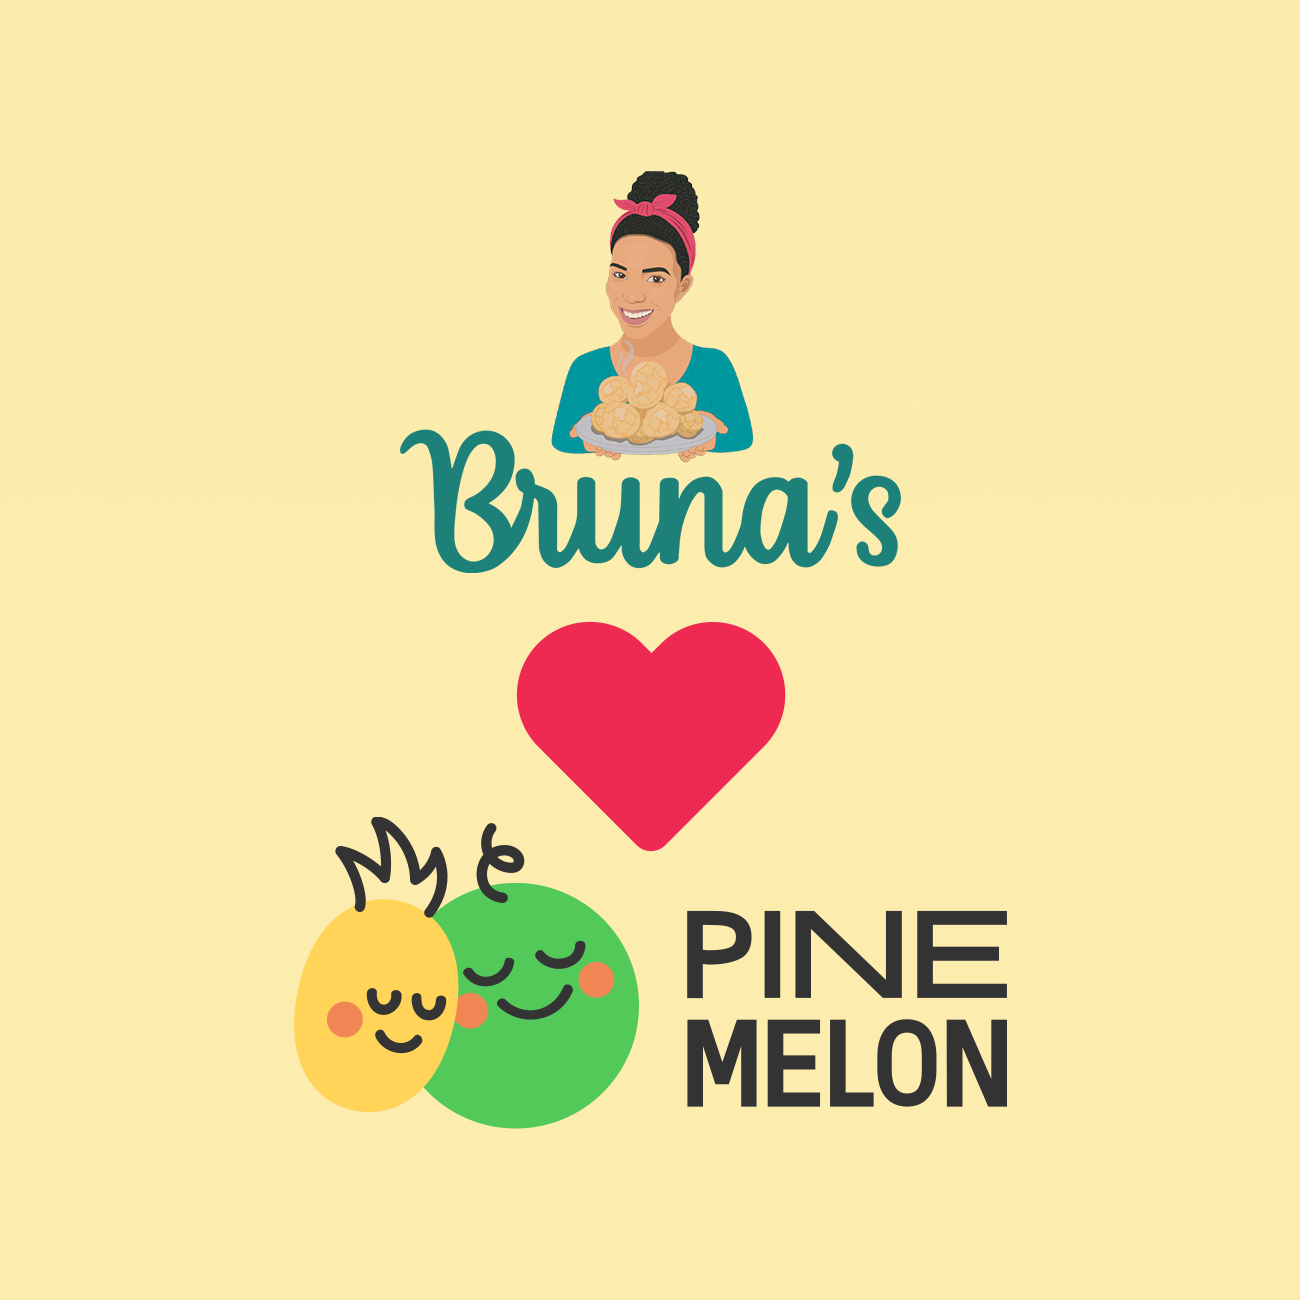 Bruna's loves Pine Melon